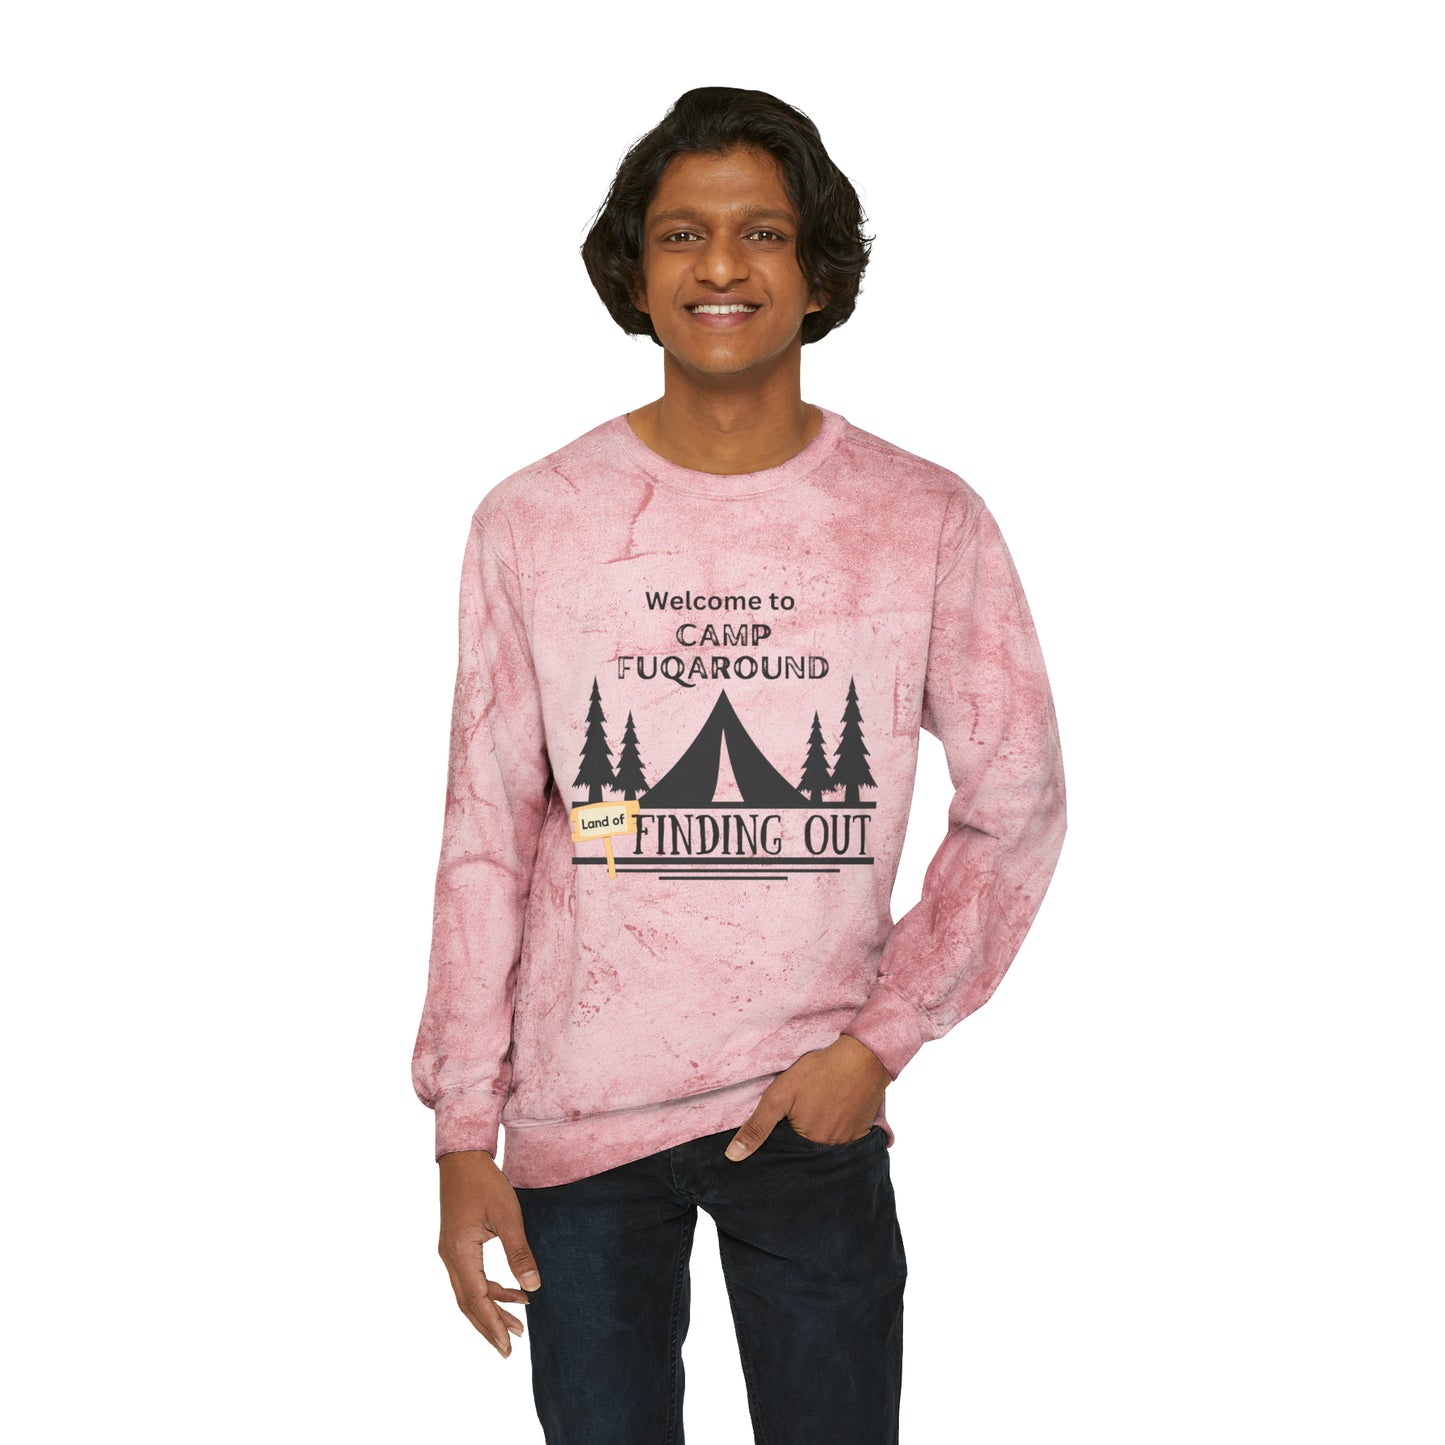 Camp Fckaround sweashirt - Sassy quote sweatshirt - Bestie sweatshirt gift